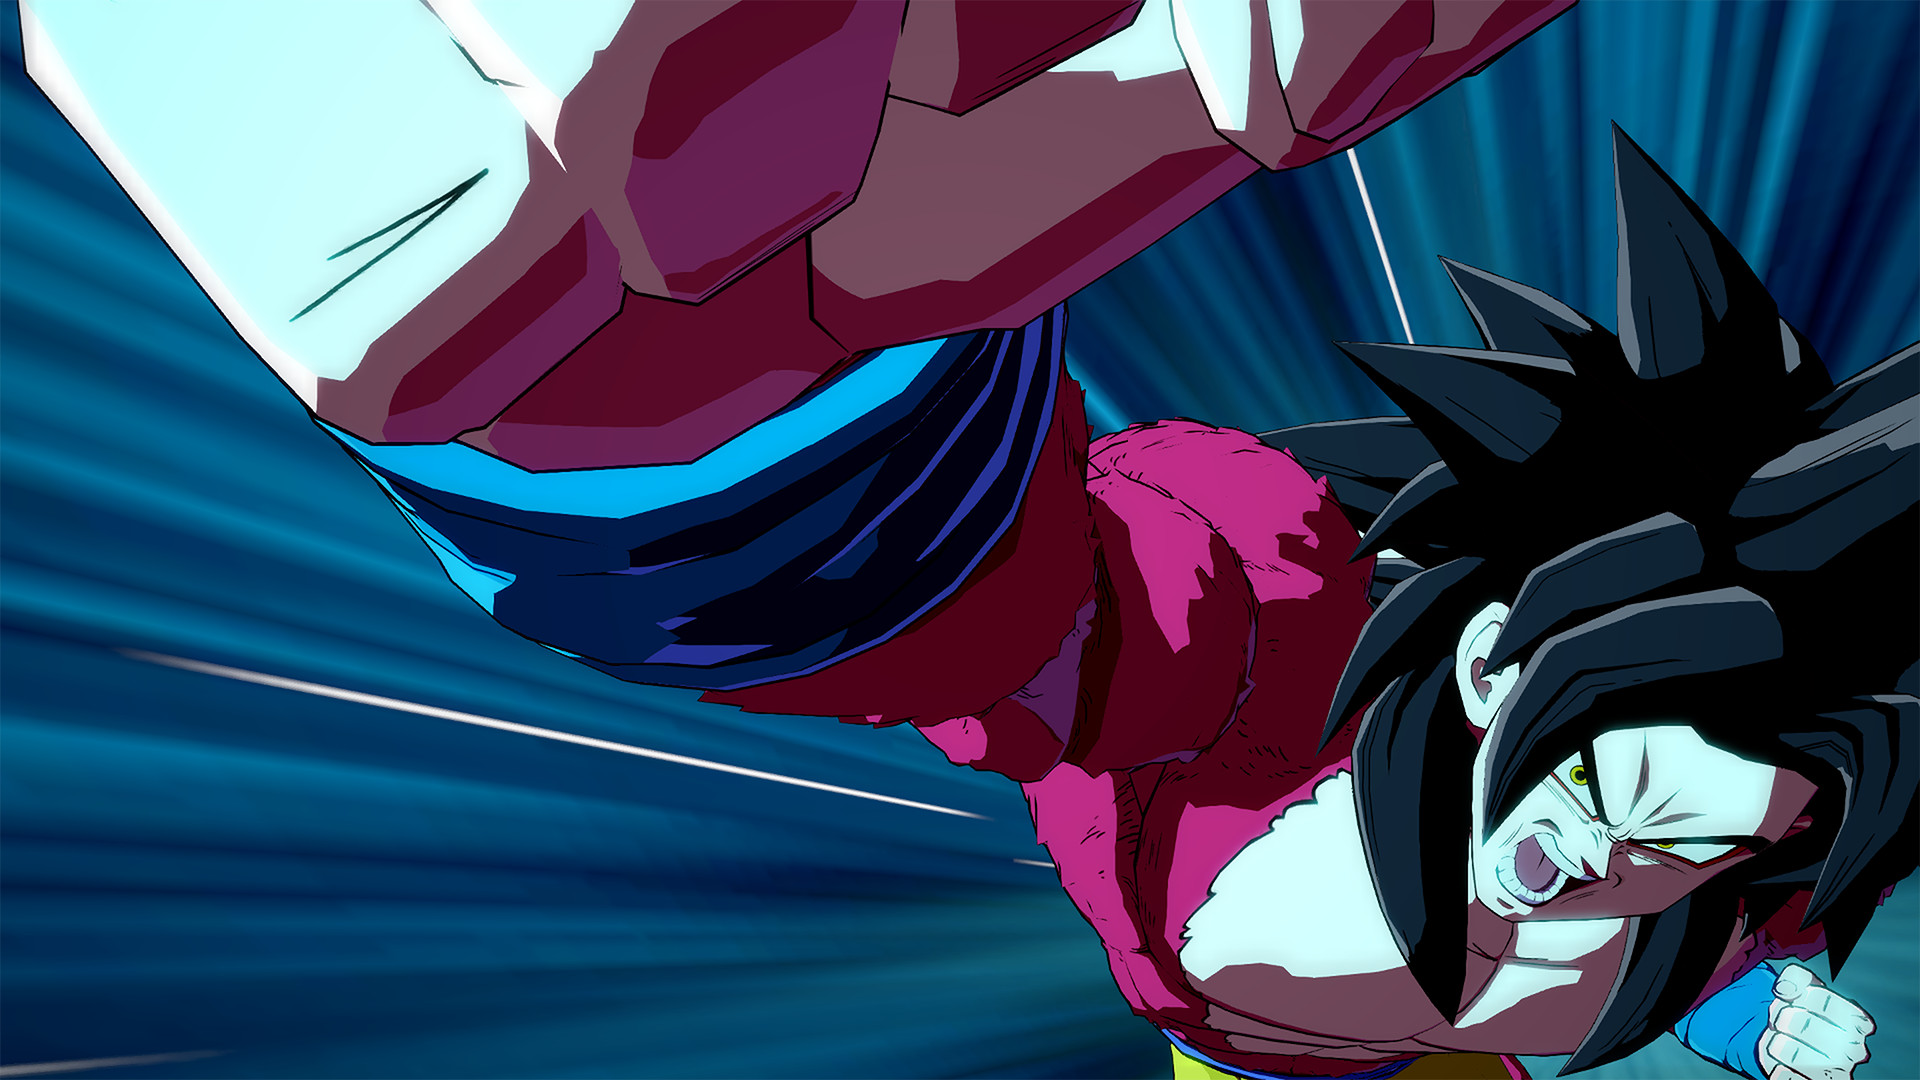 DRAGON BALL FighterZ - Goku (GT) on Steam